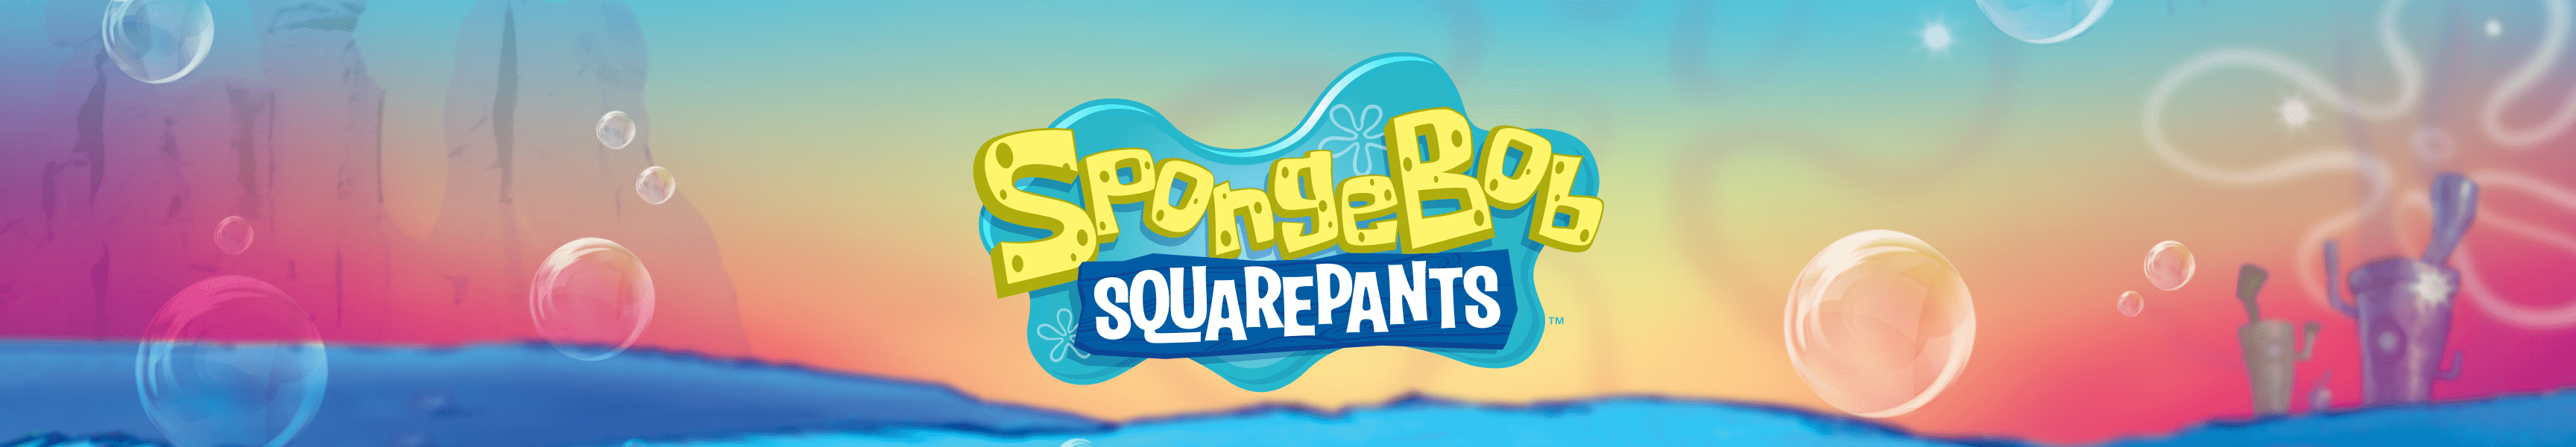 SpongeBob SquarePants Novedades